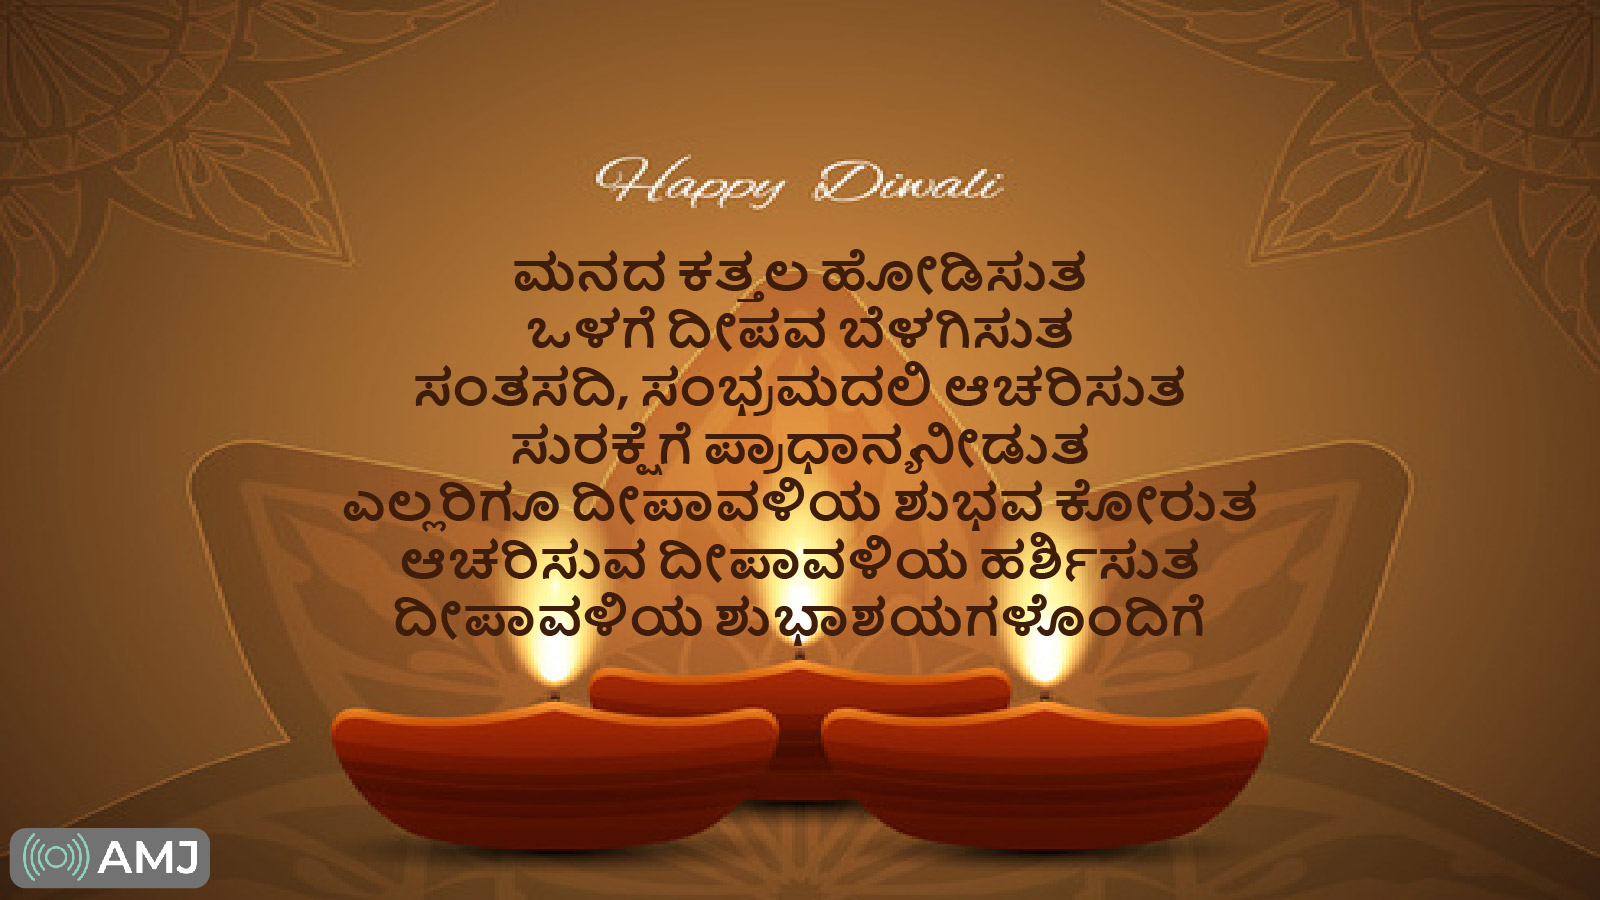 Diwali wishes in Kannada font